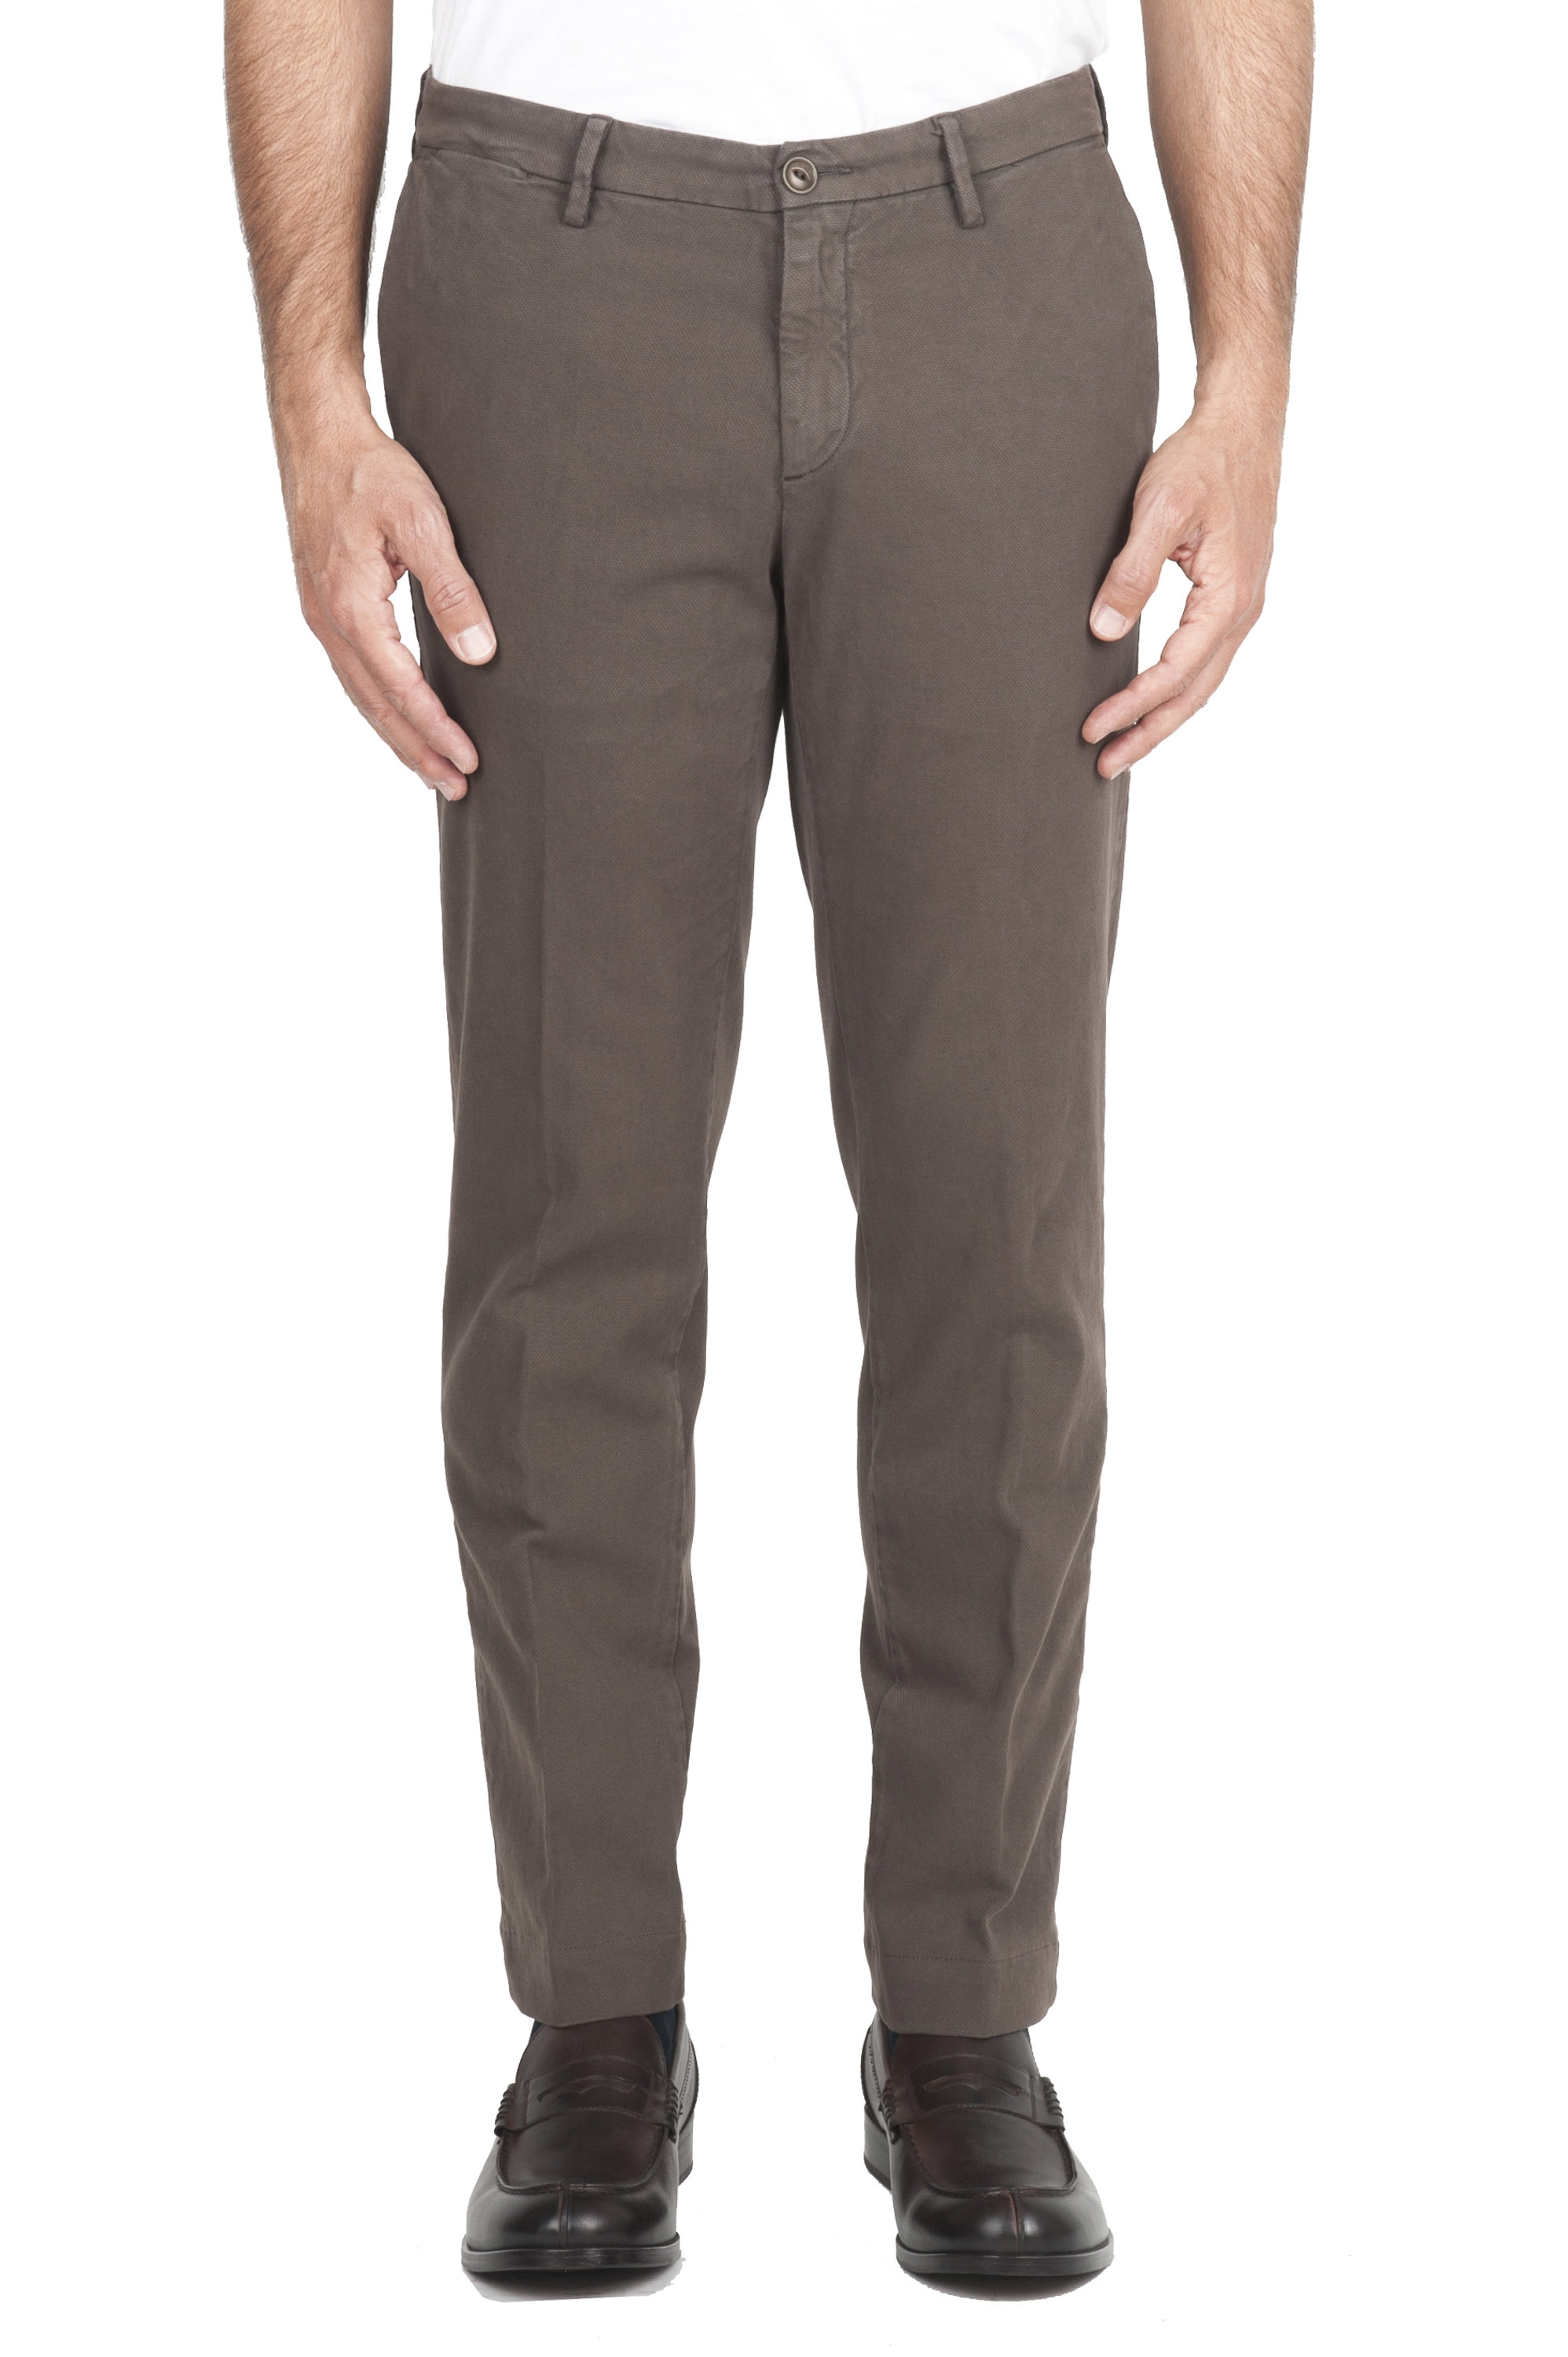 SBU 01539_19AW Classic chino pants in brown stretch cotton 01